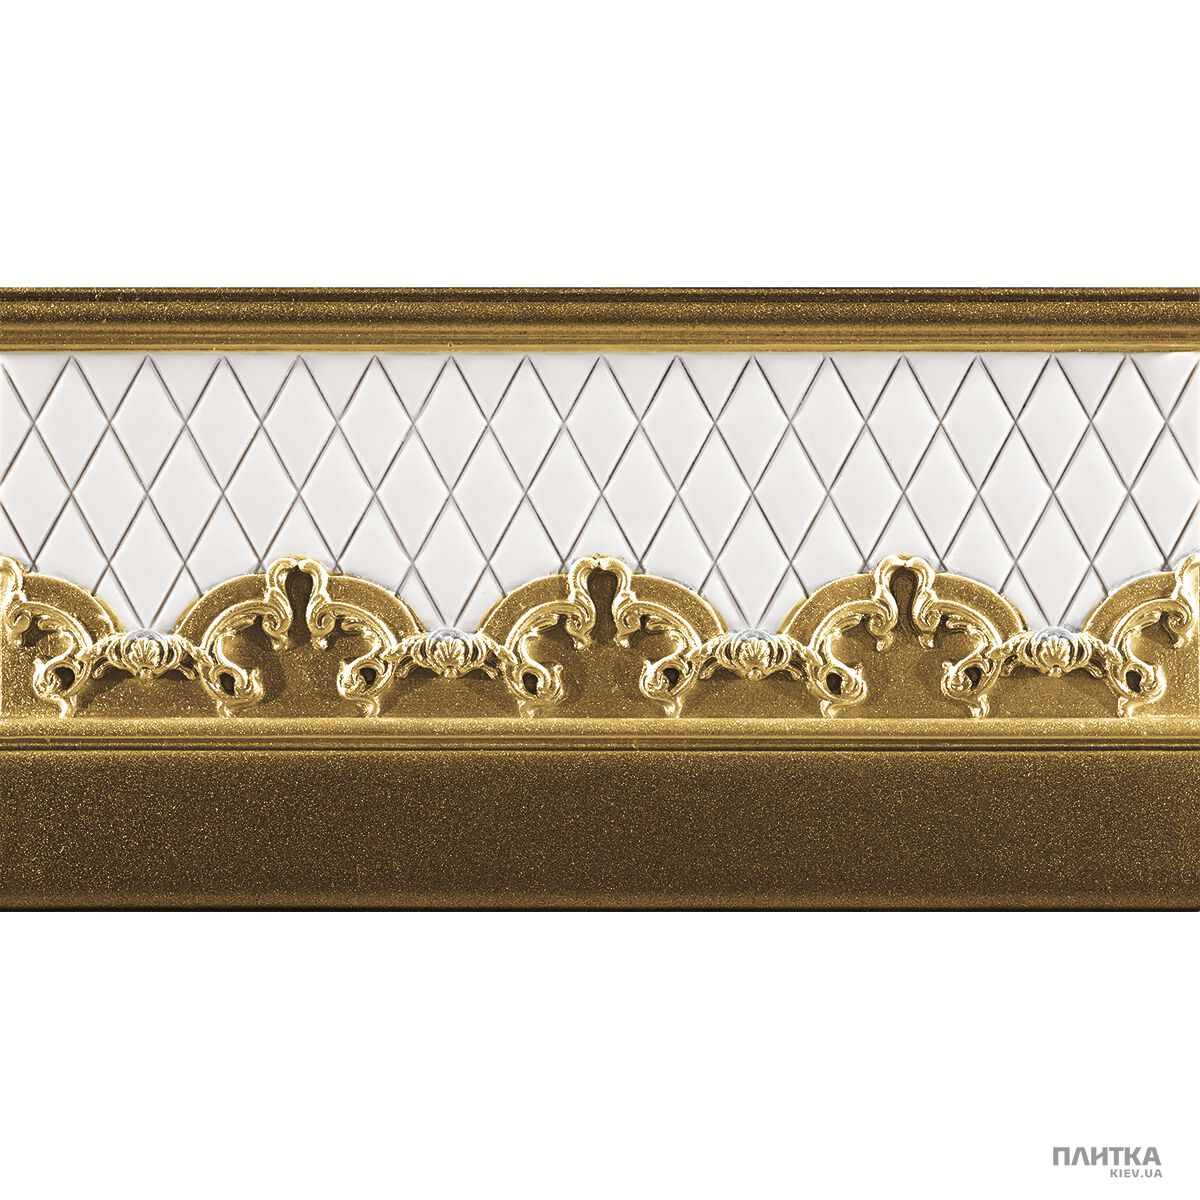 Плитка Mapisa Loire ZOCALO LOIRE GOLD фриз бежевый,золотой